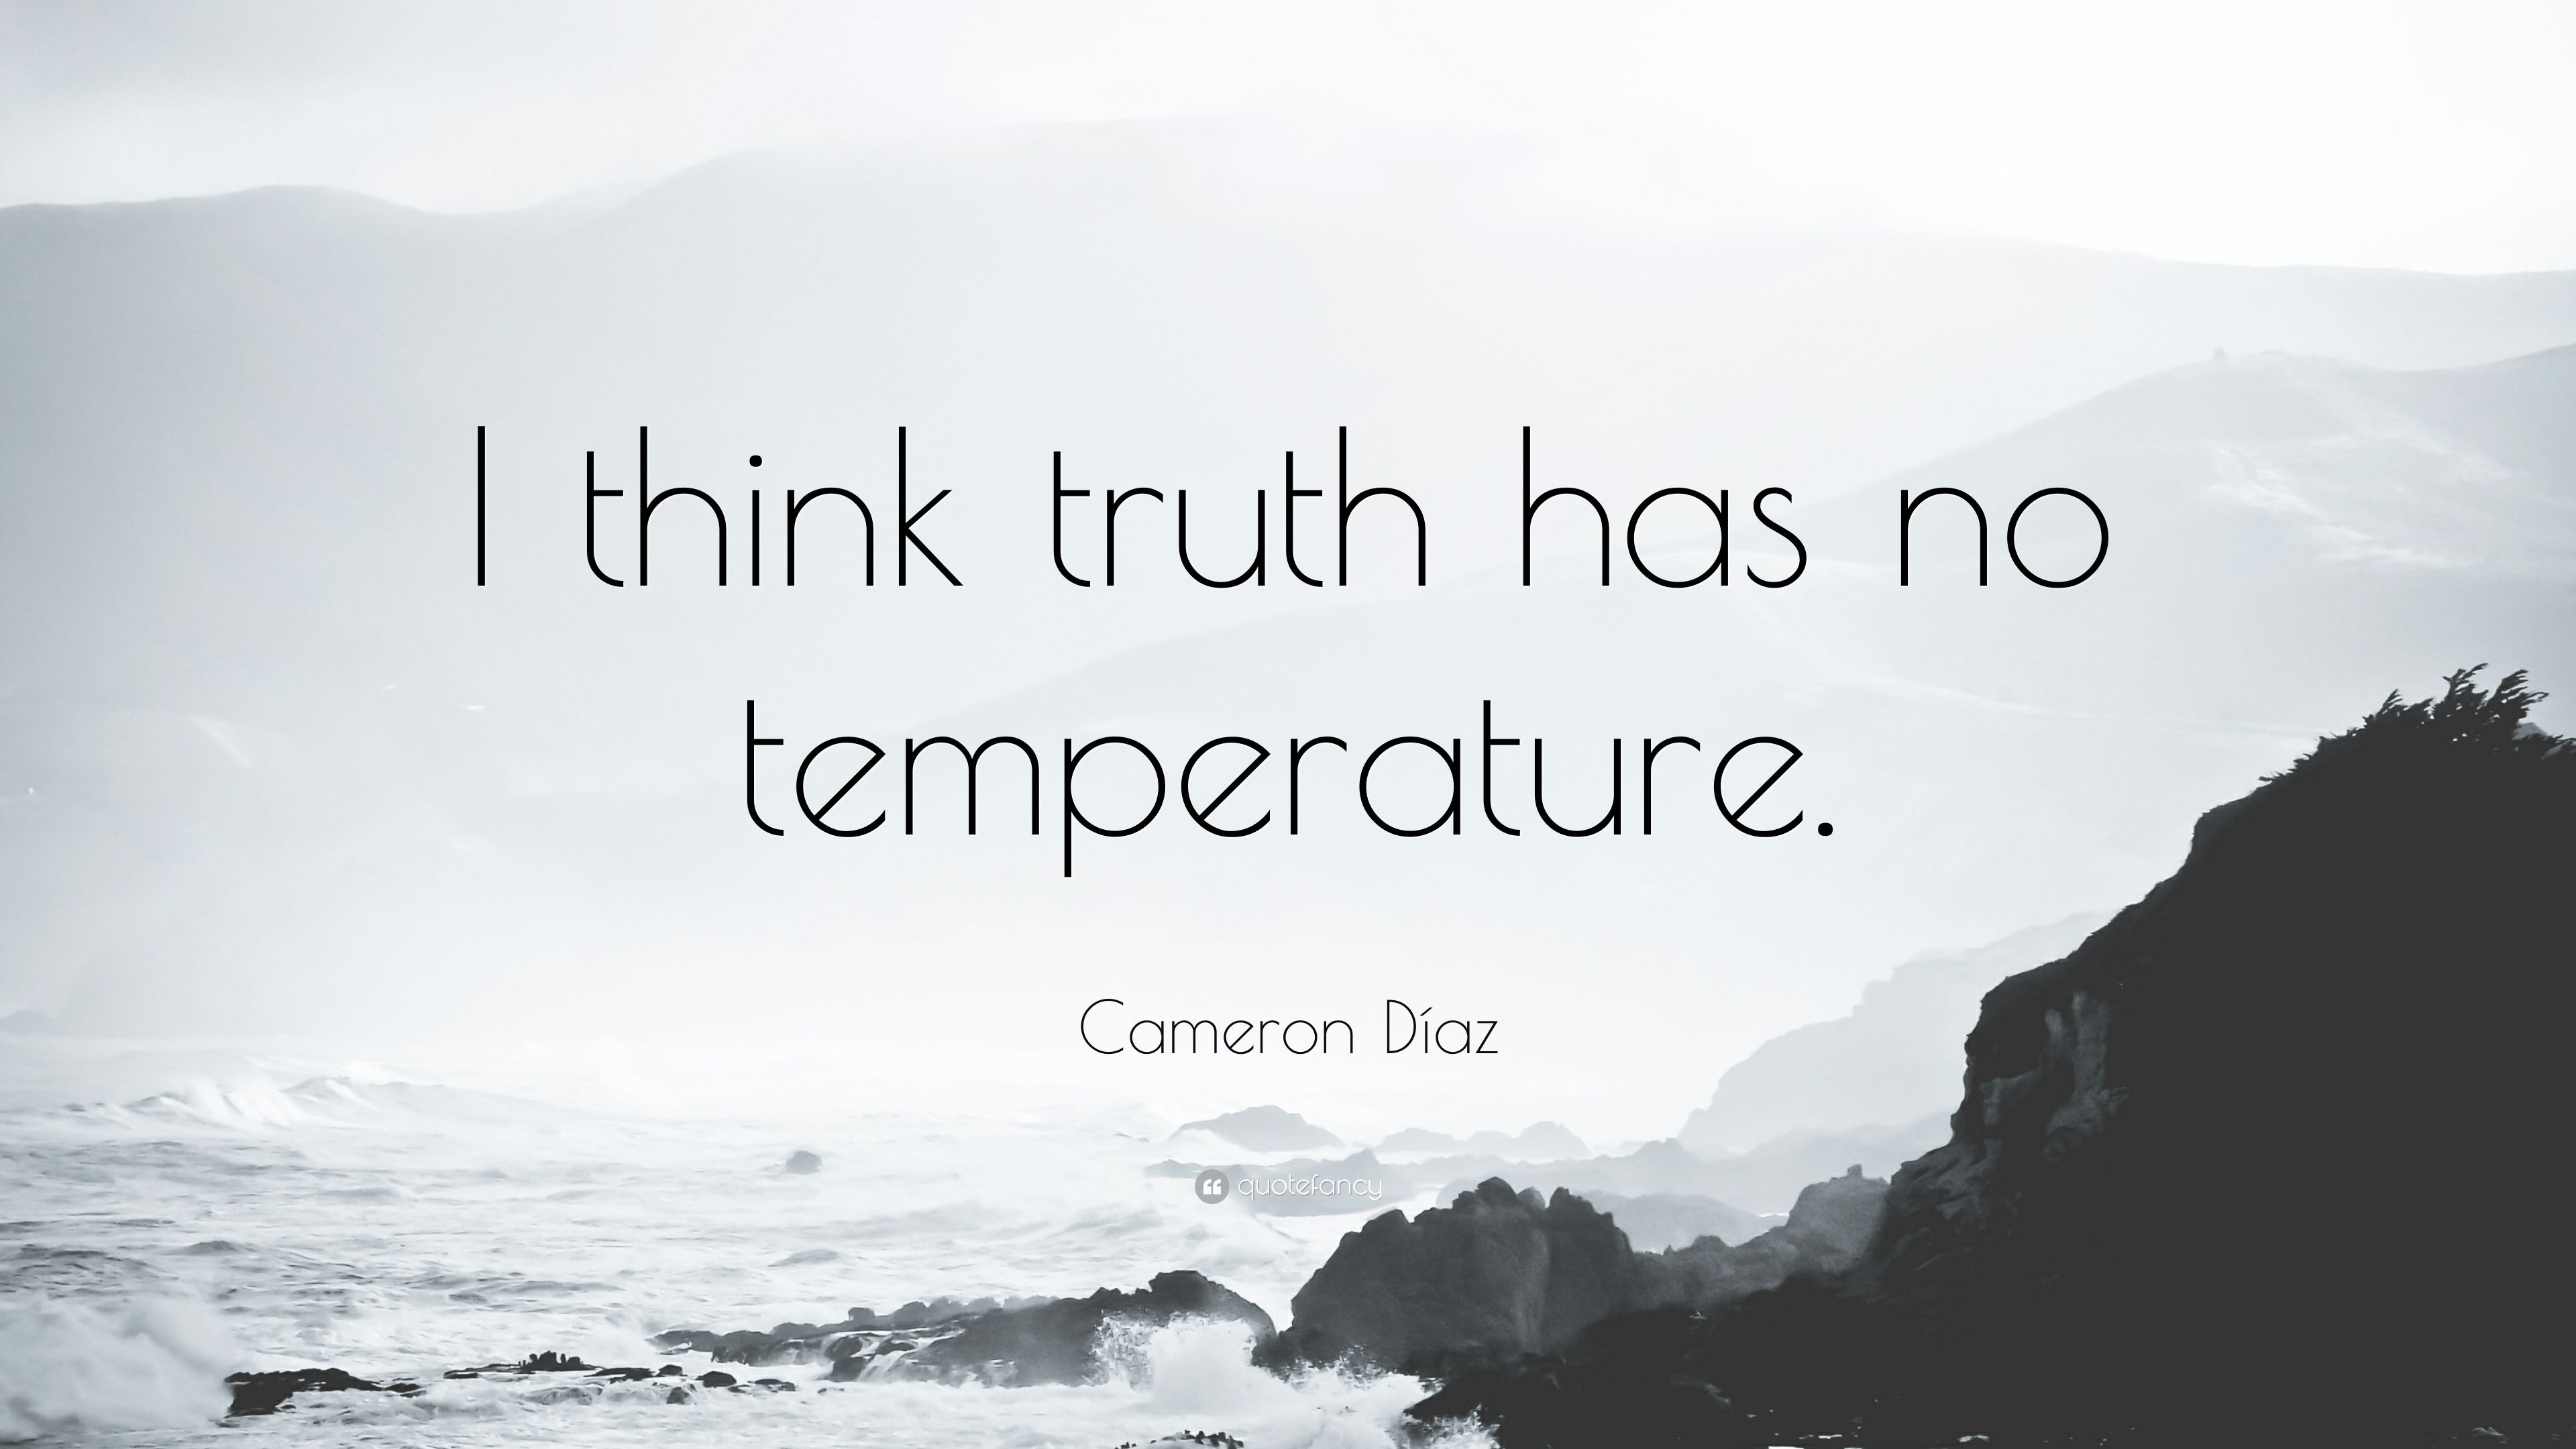 Cameron Díaz Quote: “I think truth has no temperature.” 7